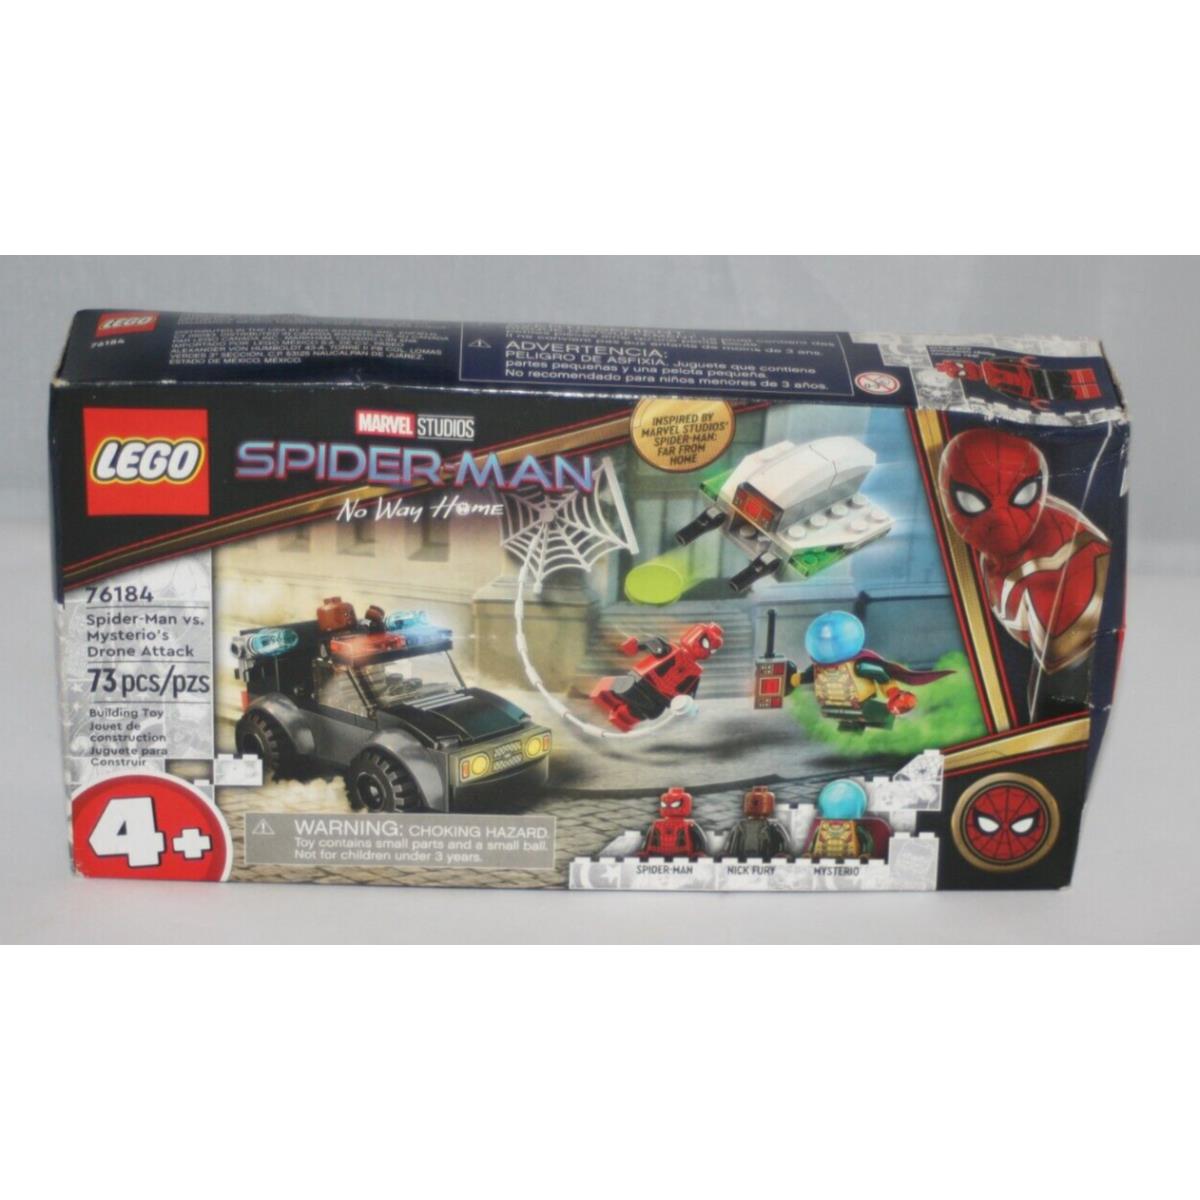 Lego Marvel Spider-man Vs. Mysterio`s Drone Attack No Way Home 76184 Toy